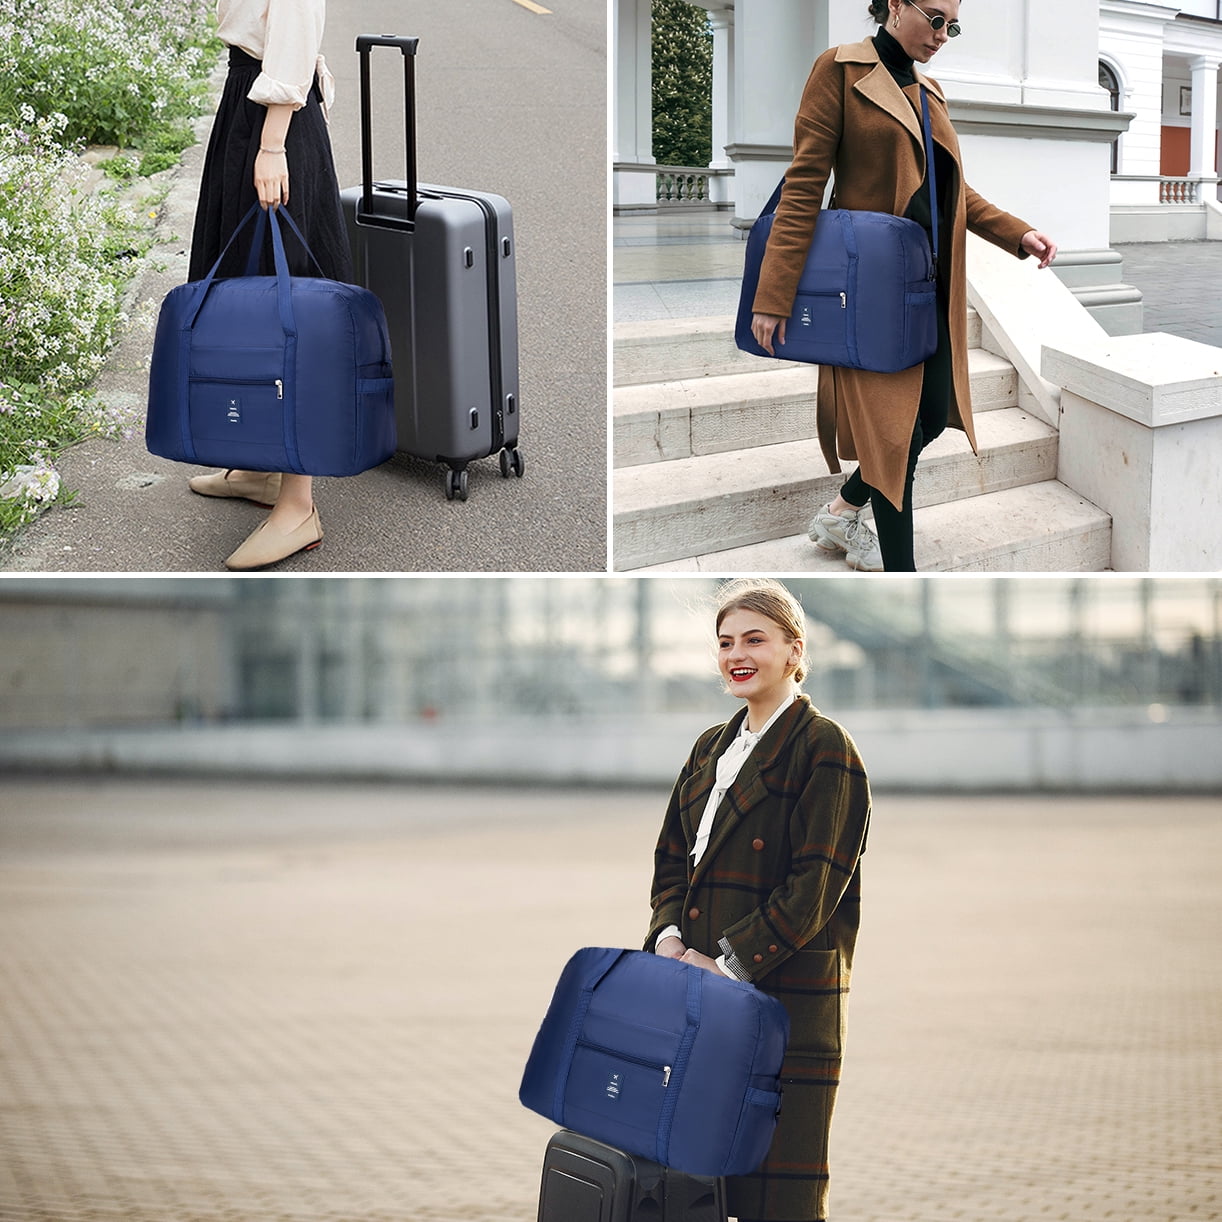 Ryanair Cabin Bags 40x20x25 cm underseat Carry-on Travel Duffel Hand  Luggage Bag 40x25x20 Black : : Fashion